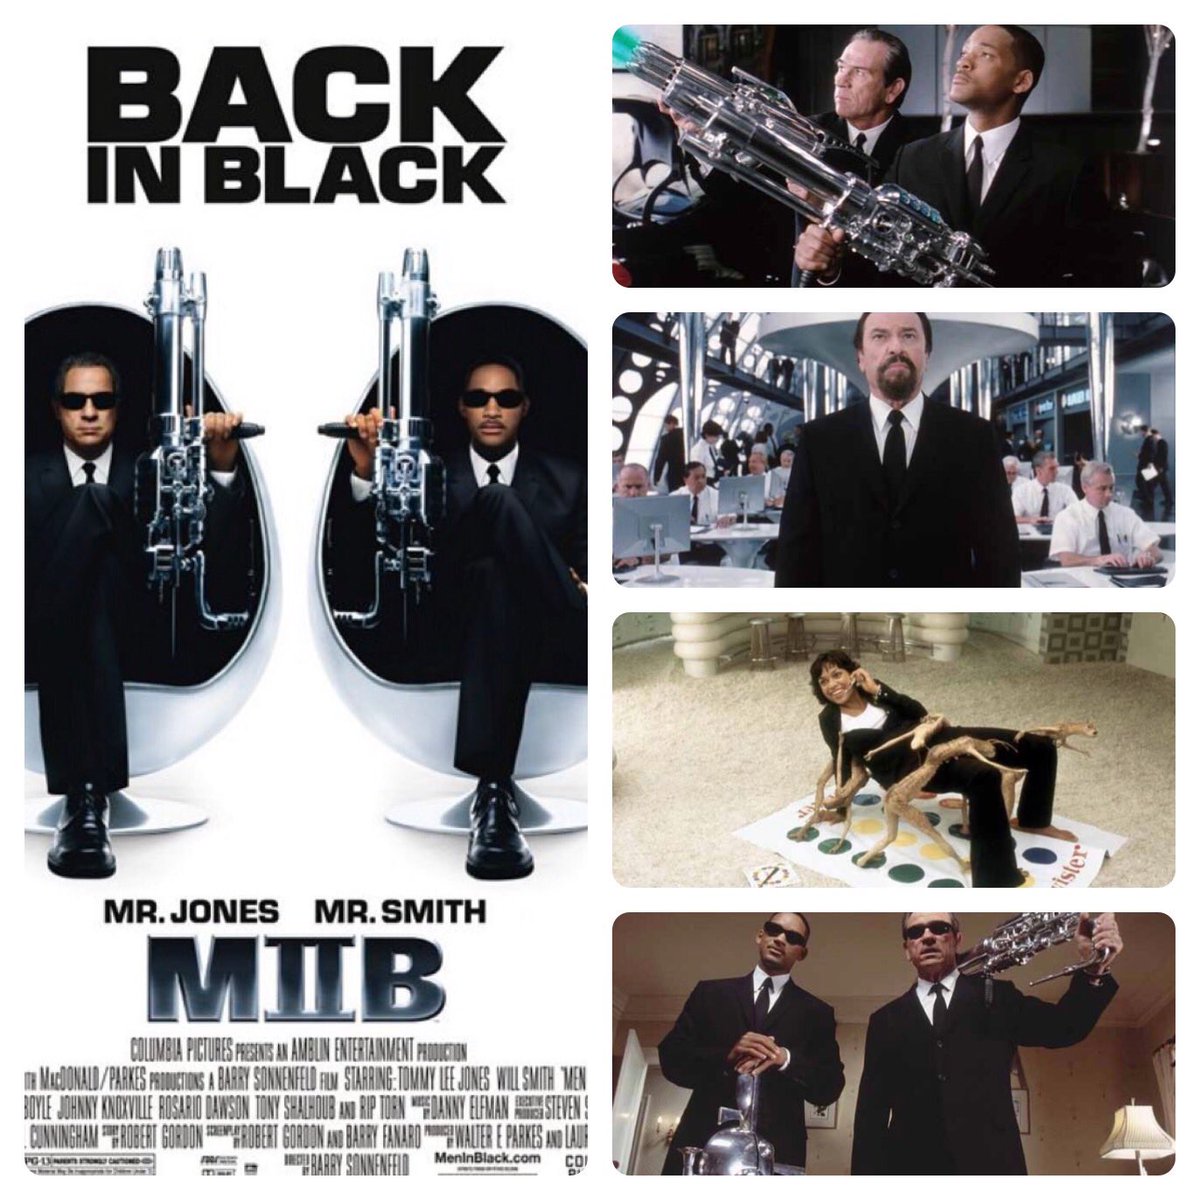 Men in Black 2 celebrates its 20th anniversary today
#meninblack #meninblack2 #mib2 #meninblackmovie #meninblackfans #meninblackfilm #agentk #kevinbrown #agentj #mibii #miib #jamesdarrelledwardsiii #willsmithfan #willsmithmovie #tommyleejonesmovies #tommyleejonesfans